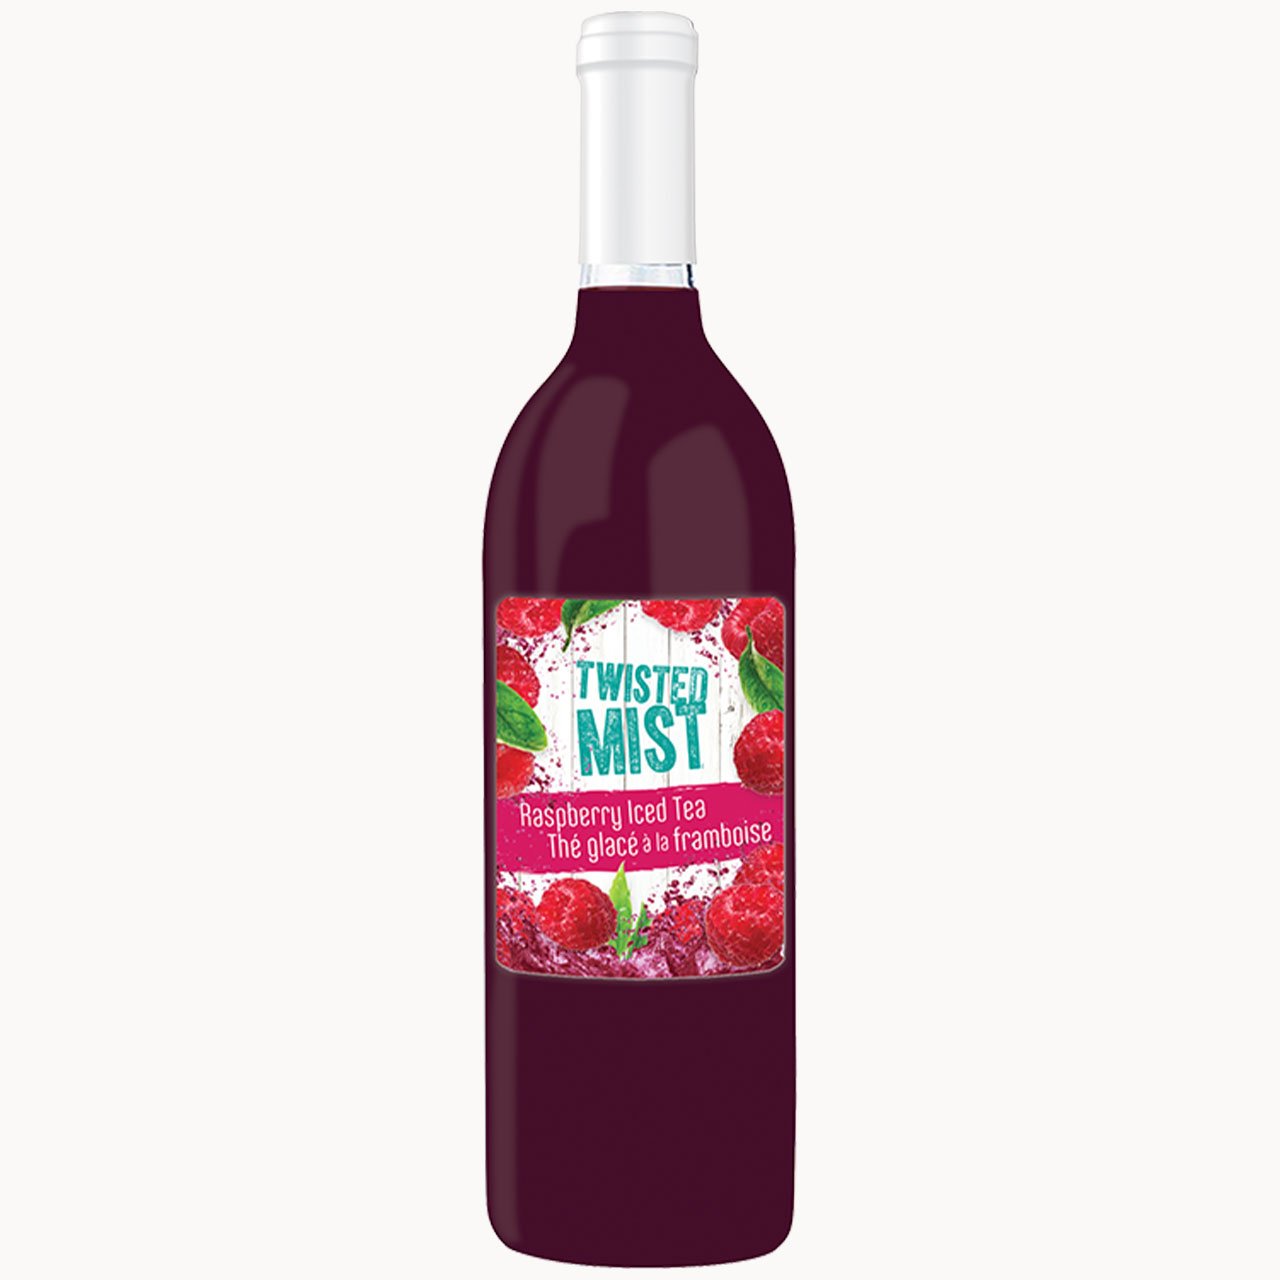 Raspberry Ice Tea Wine Cocktail Recipe Kit - Winexpert Twisted Mist Limited Edition - Preorder